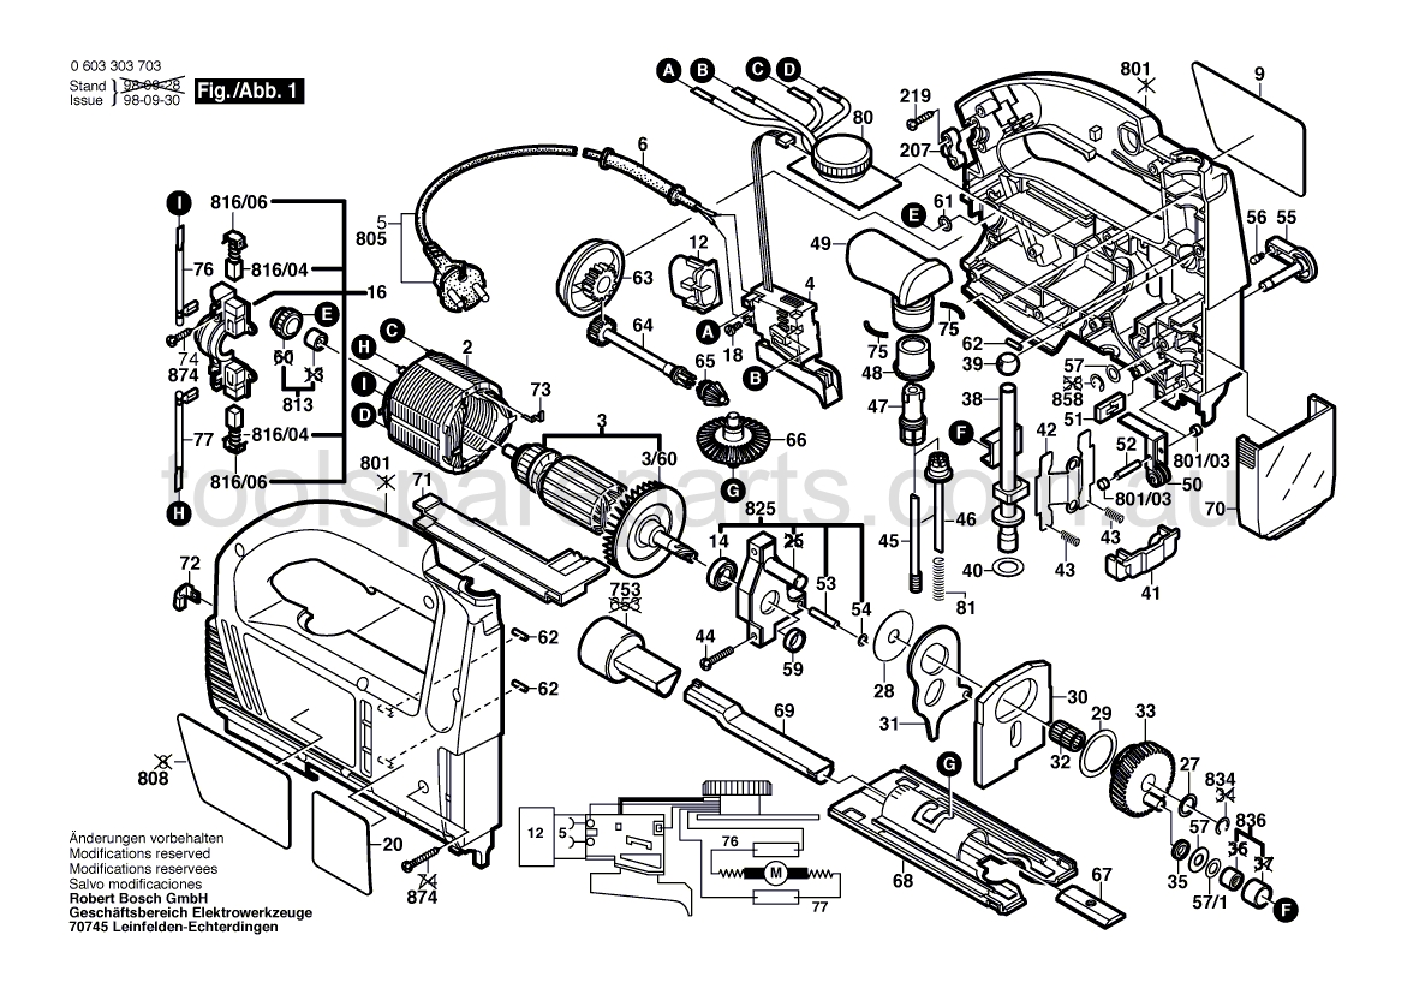 Bosch PST 800 PAC 0603303737  Diagram 1